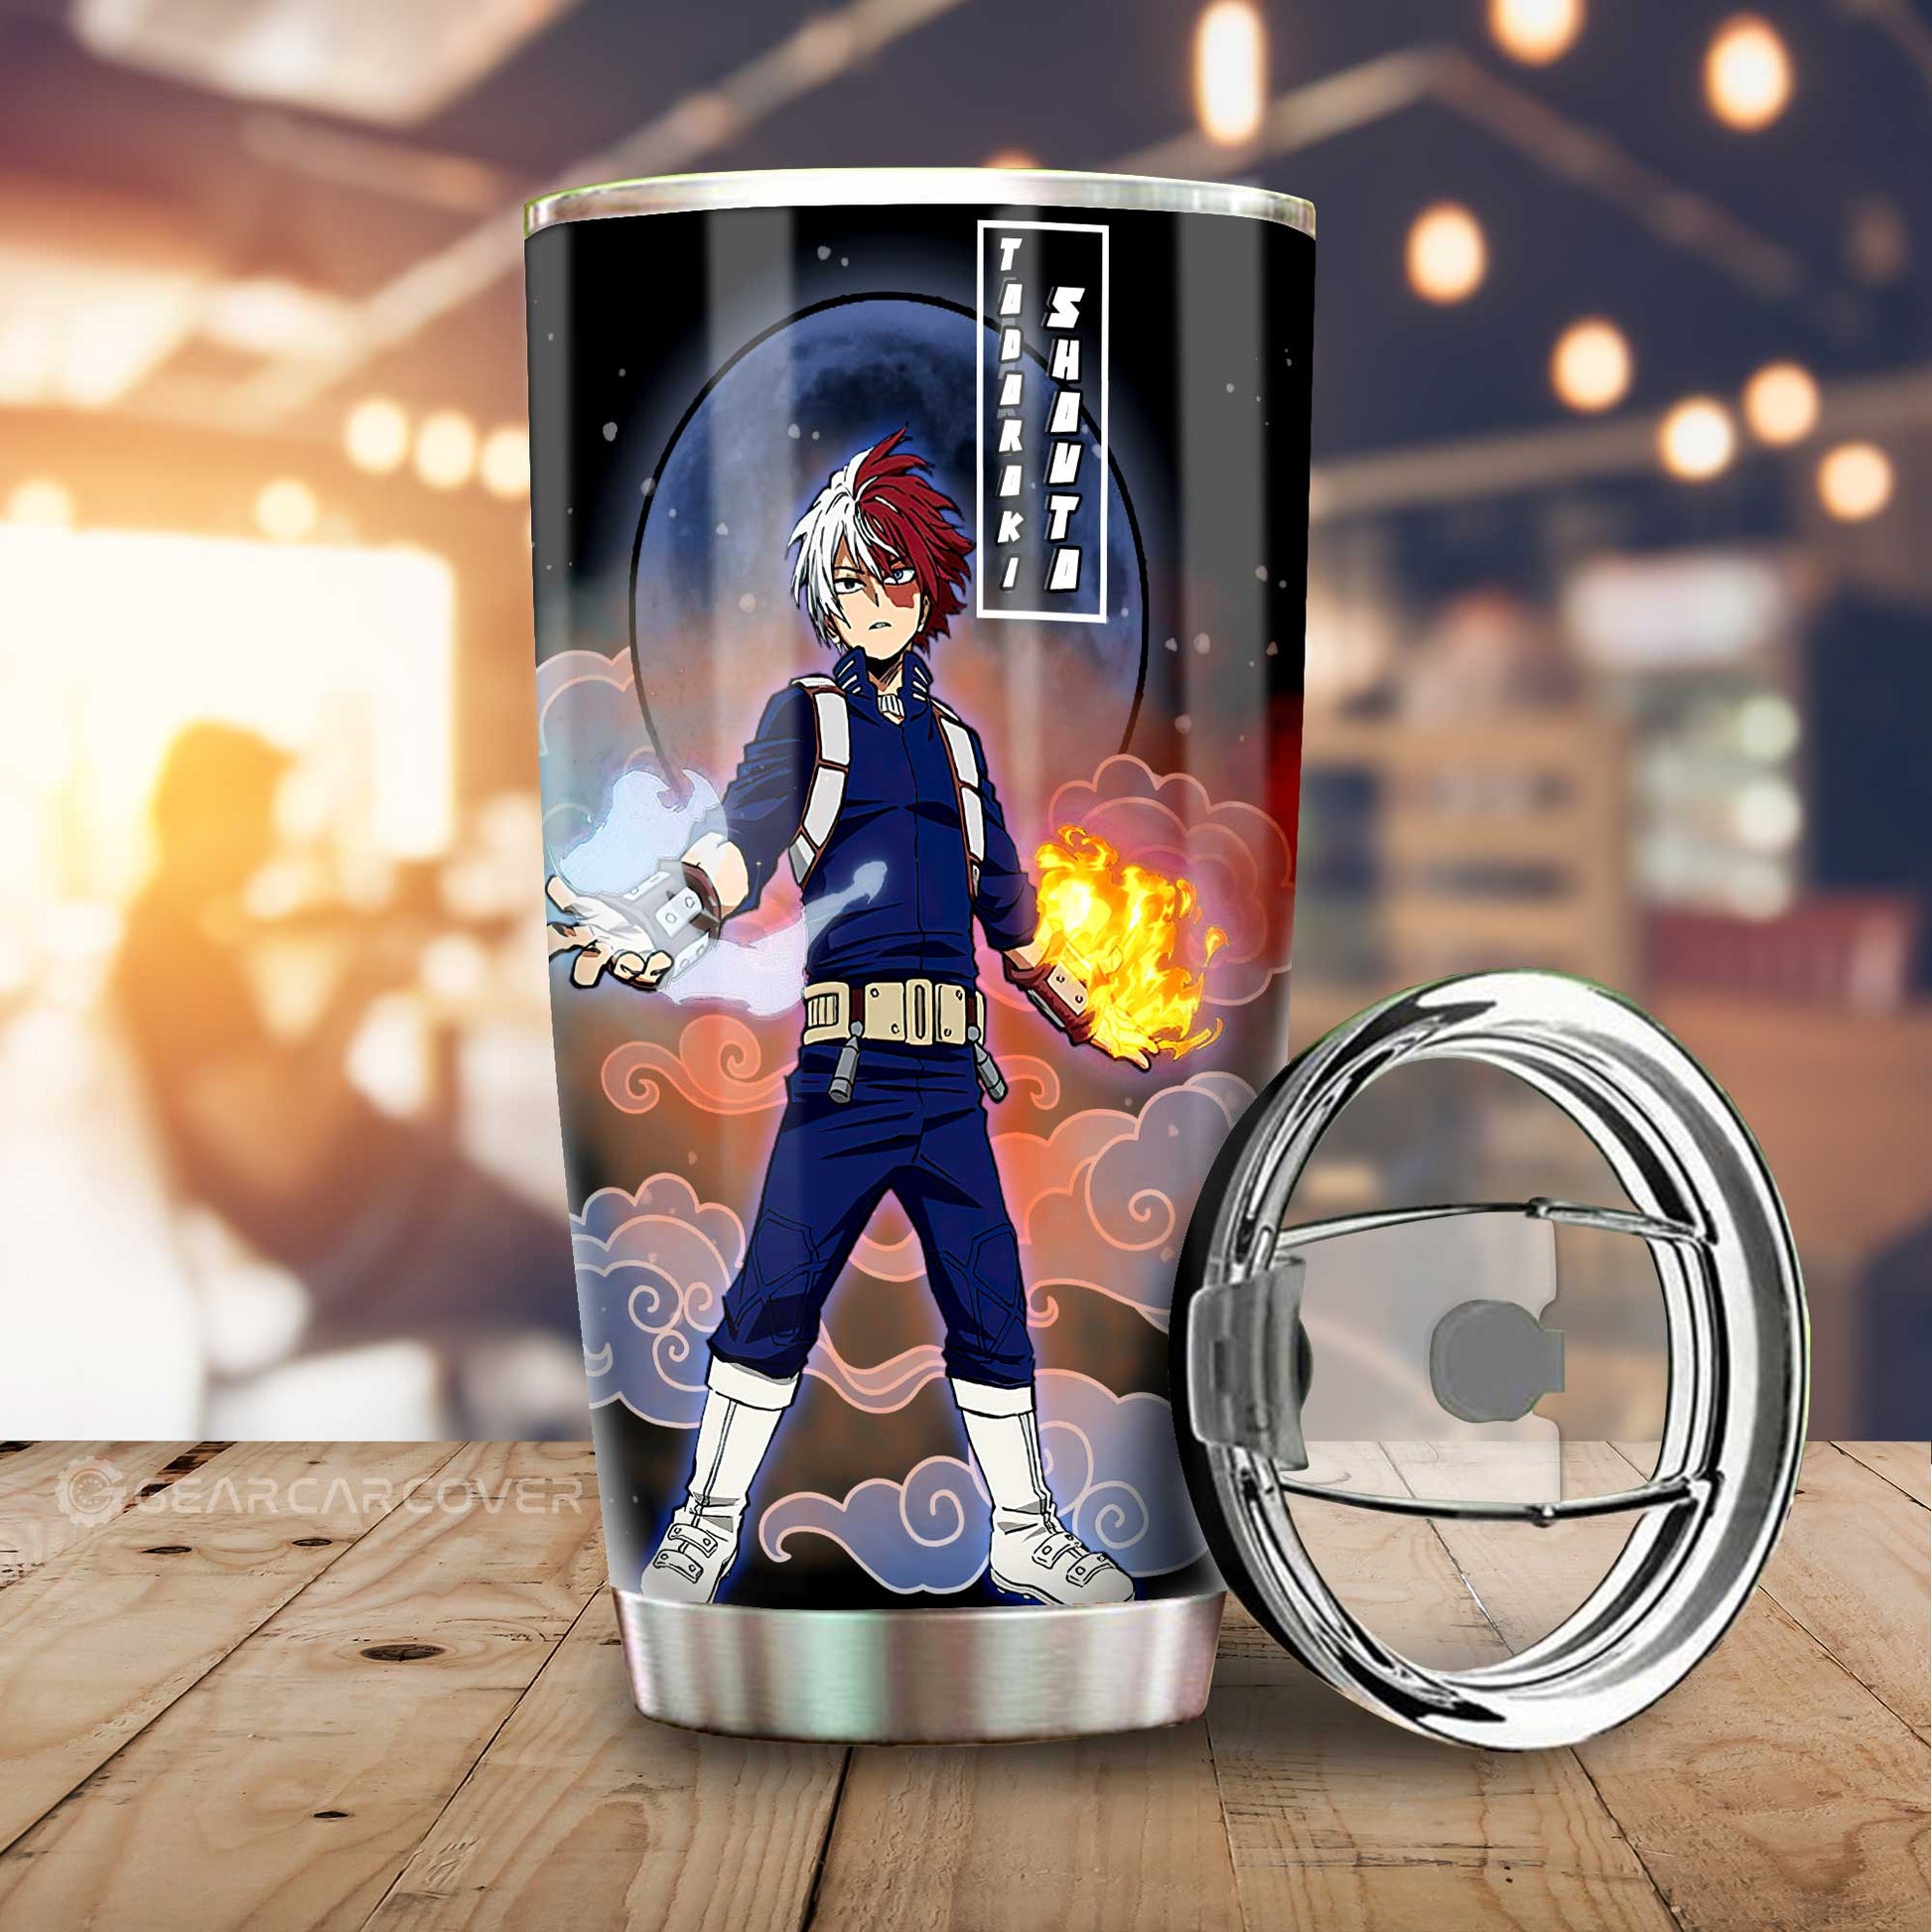 Shoto Todoroki Tumbler Cup Custom Anime My Hero Academia Car Interior Accessories - Gearcarcover - 1